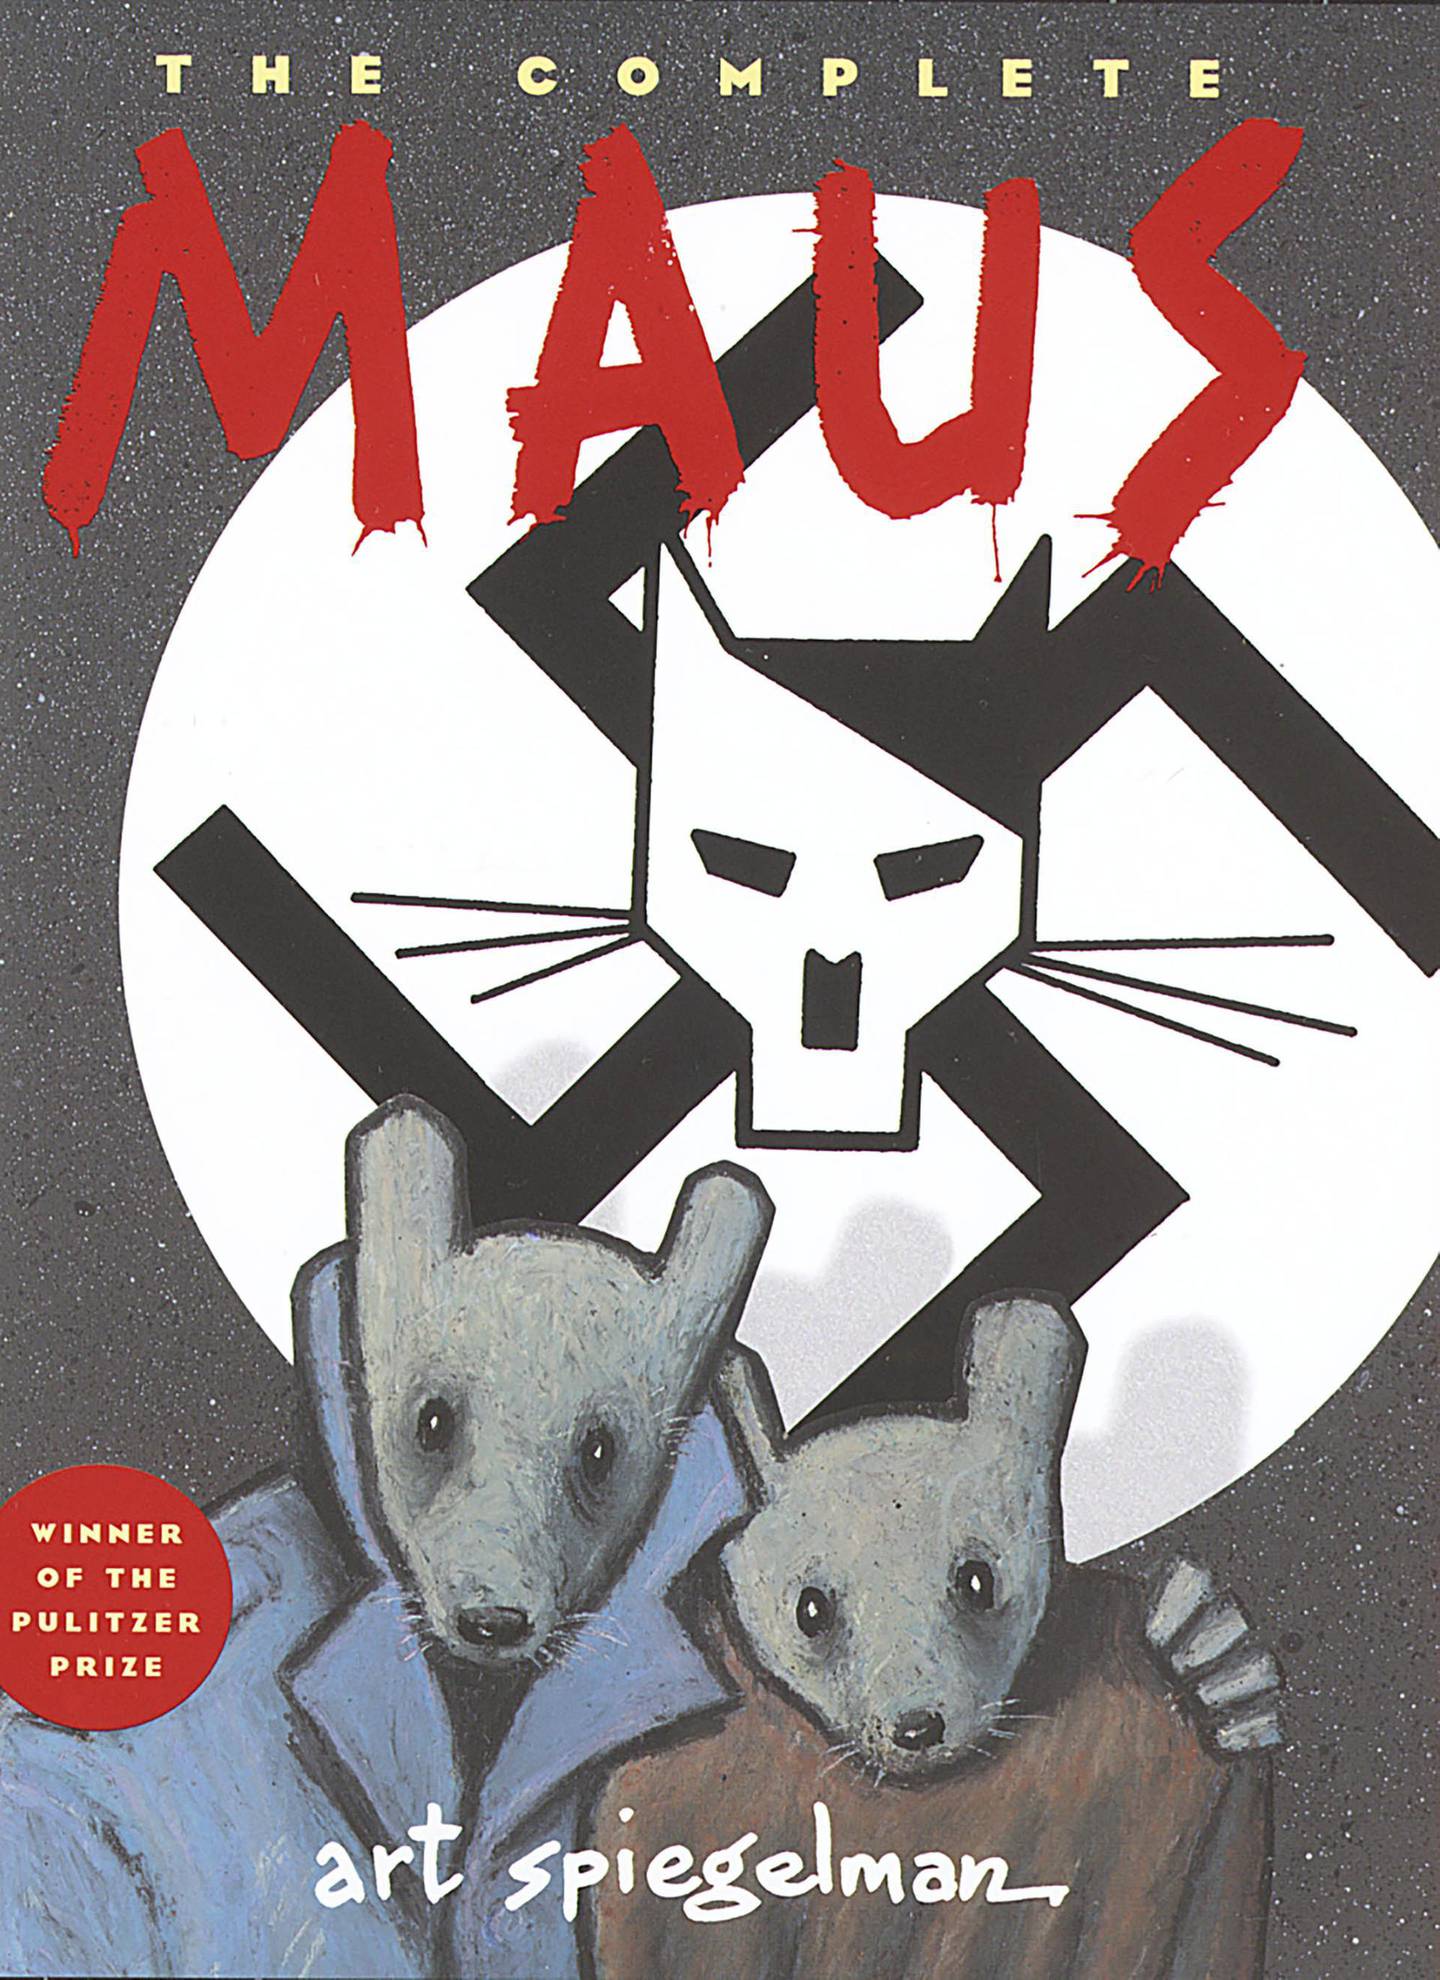 The Complete Maus: A Survivor's Tale by Art Spiegelman published by Pantheon. Courtesy Penguin Random House